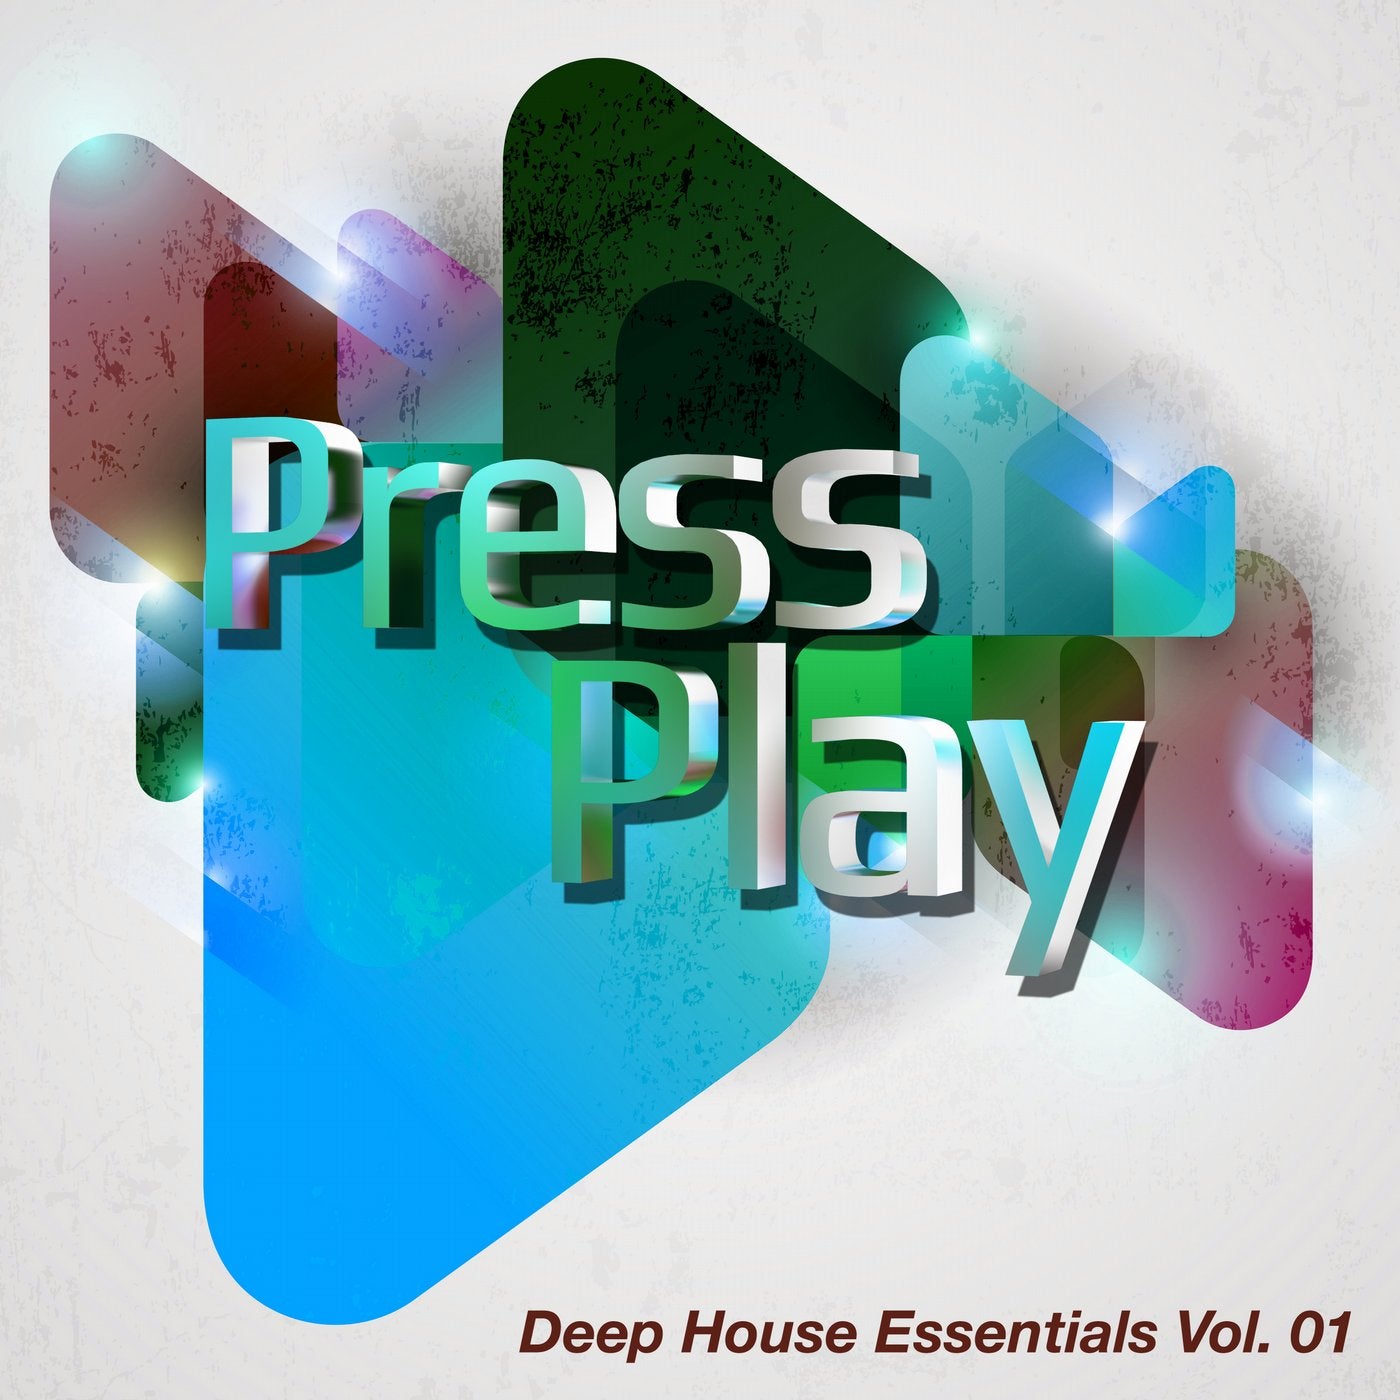 Deep House Essentials Vol. 01